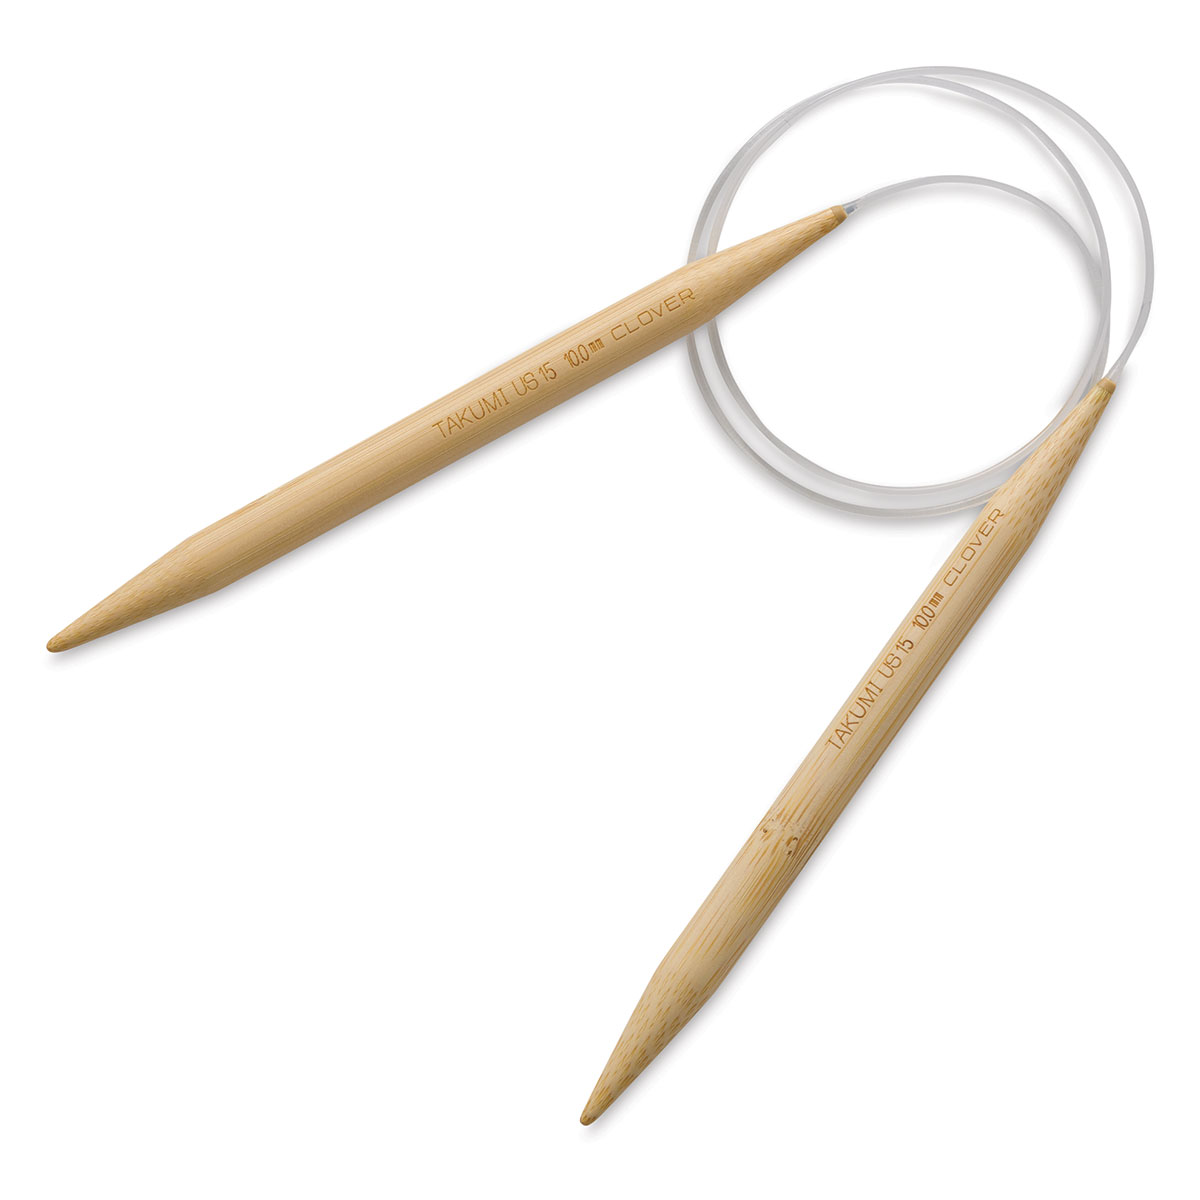  Clover Needlecraft Takumi Bamboo Interchangeable Circular  Knitting Needles Size 15/10mm Bundle with 1 Artsiga Crafts Stitch Holder  3644